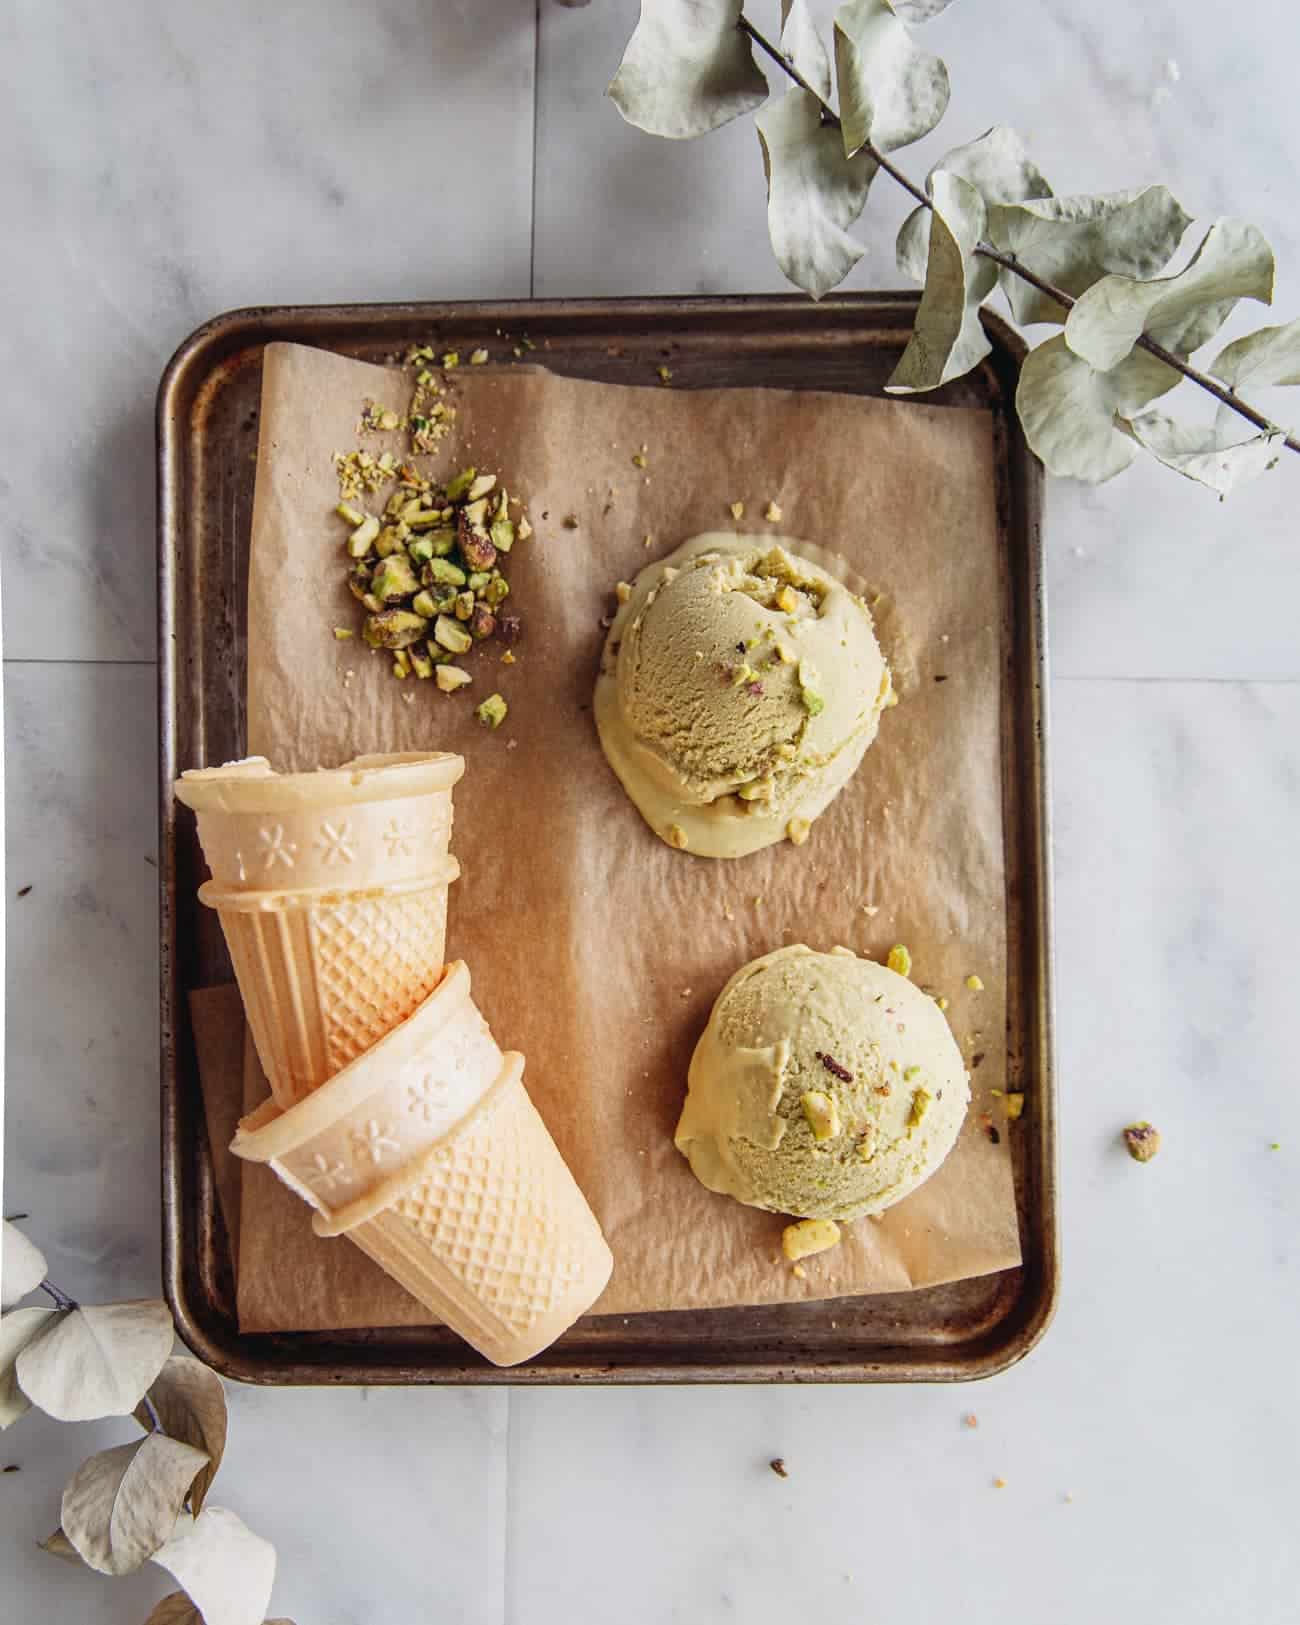 a tray with 2 scoops of pistachio ice cream and 2 ice cream cones